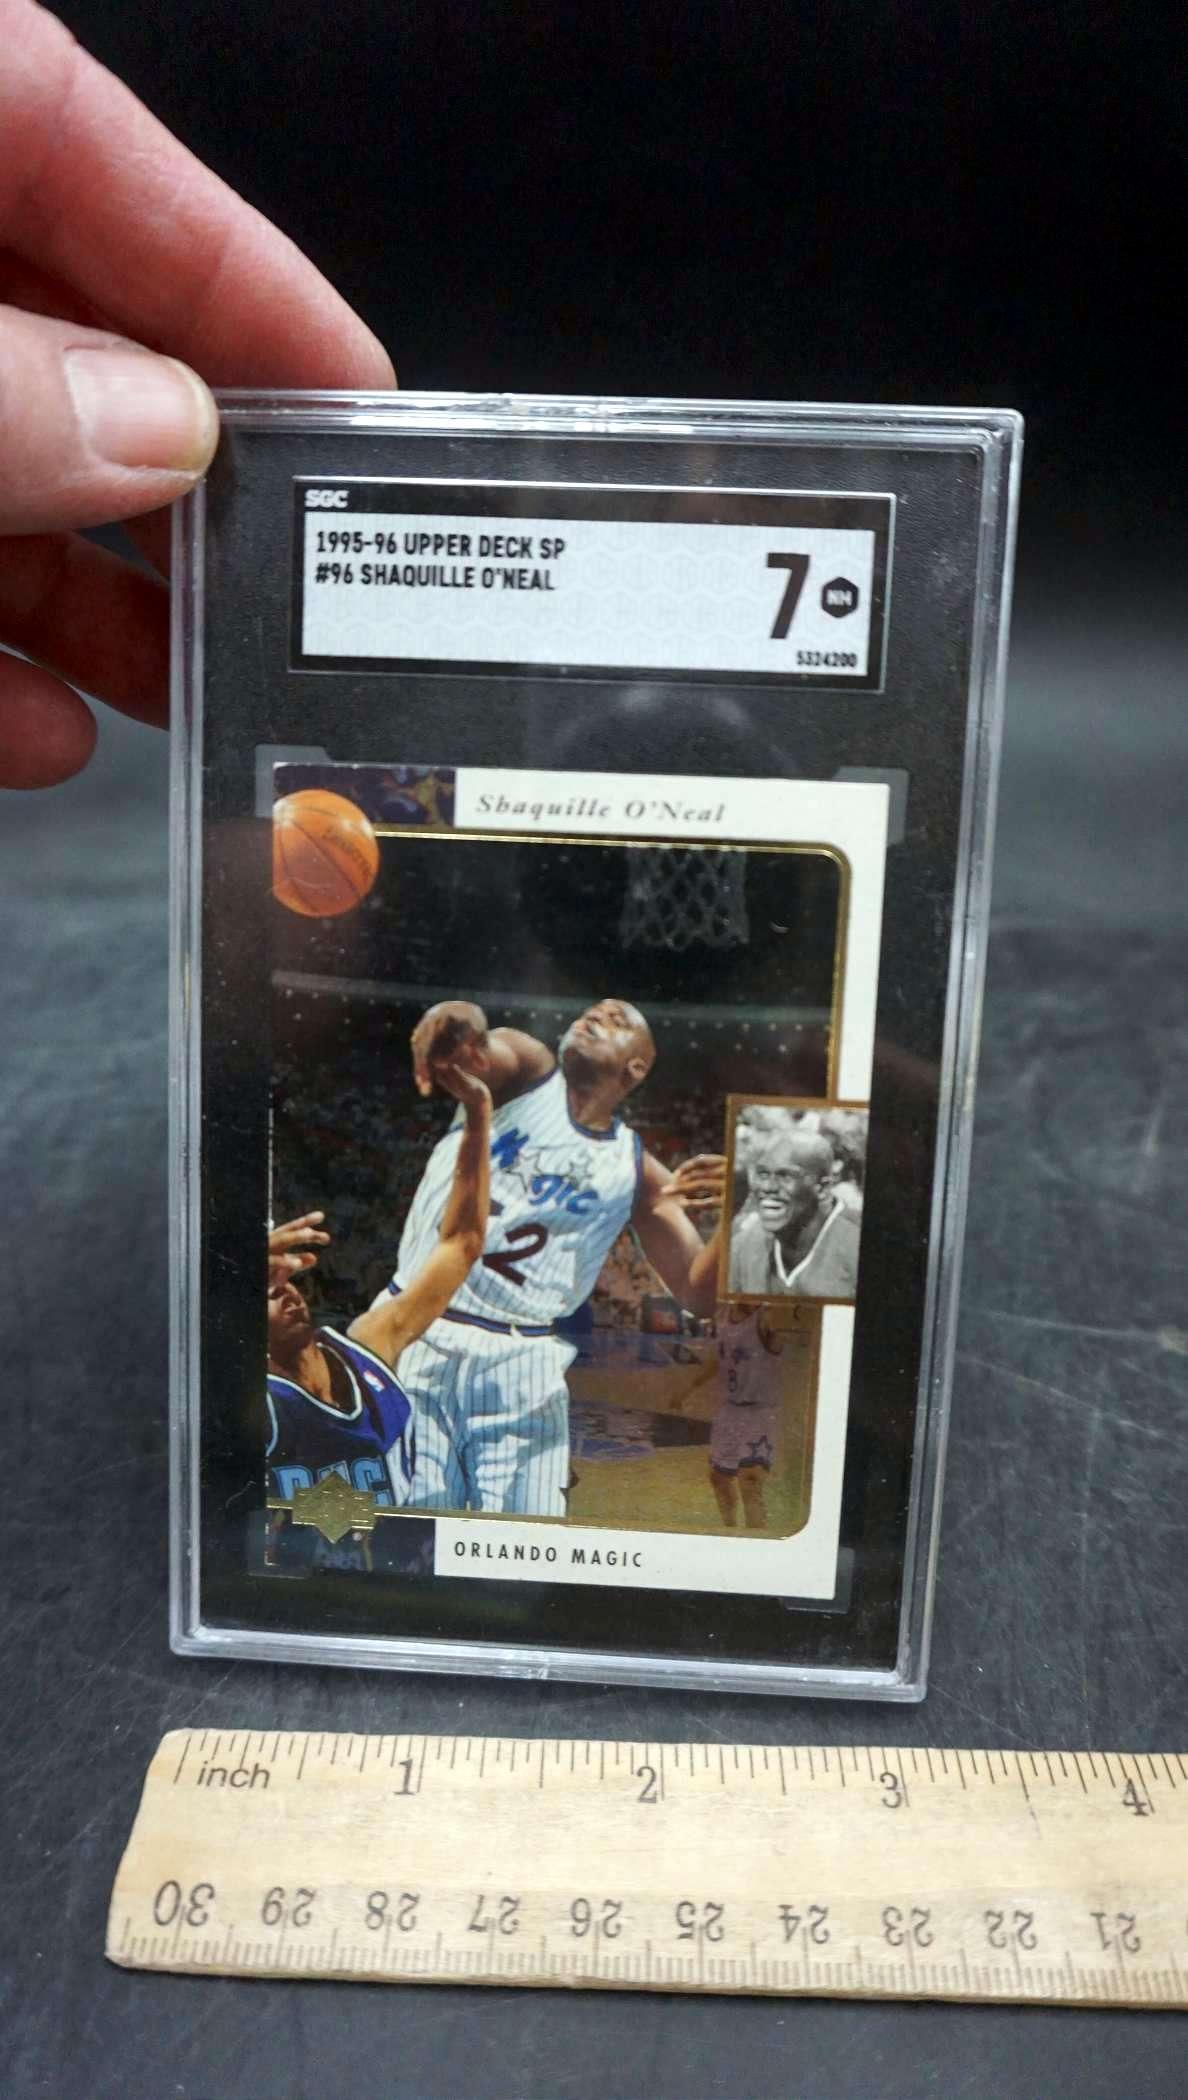 Sgc Graded 1995 Upper Deck Basketball Card - Shaquille O'Neal